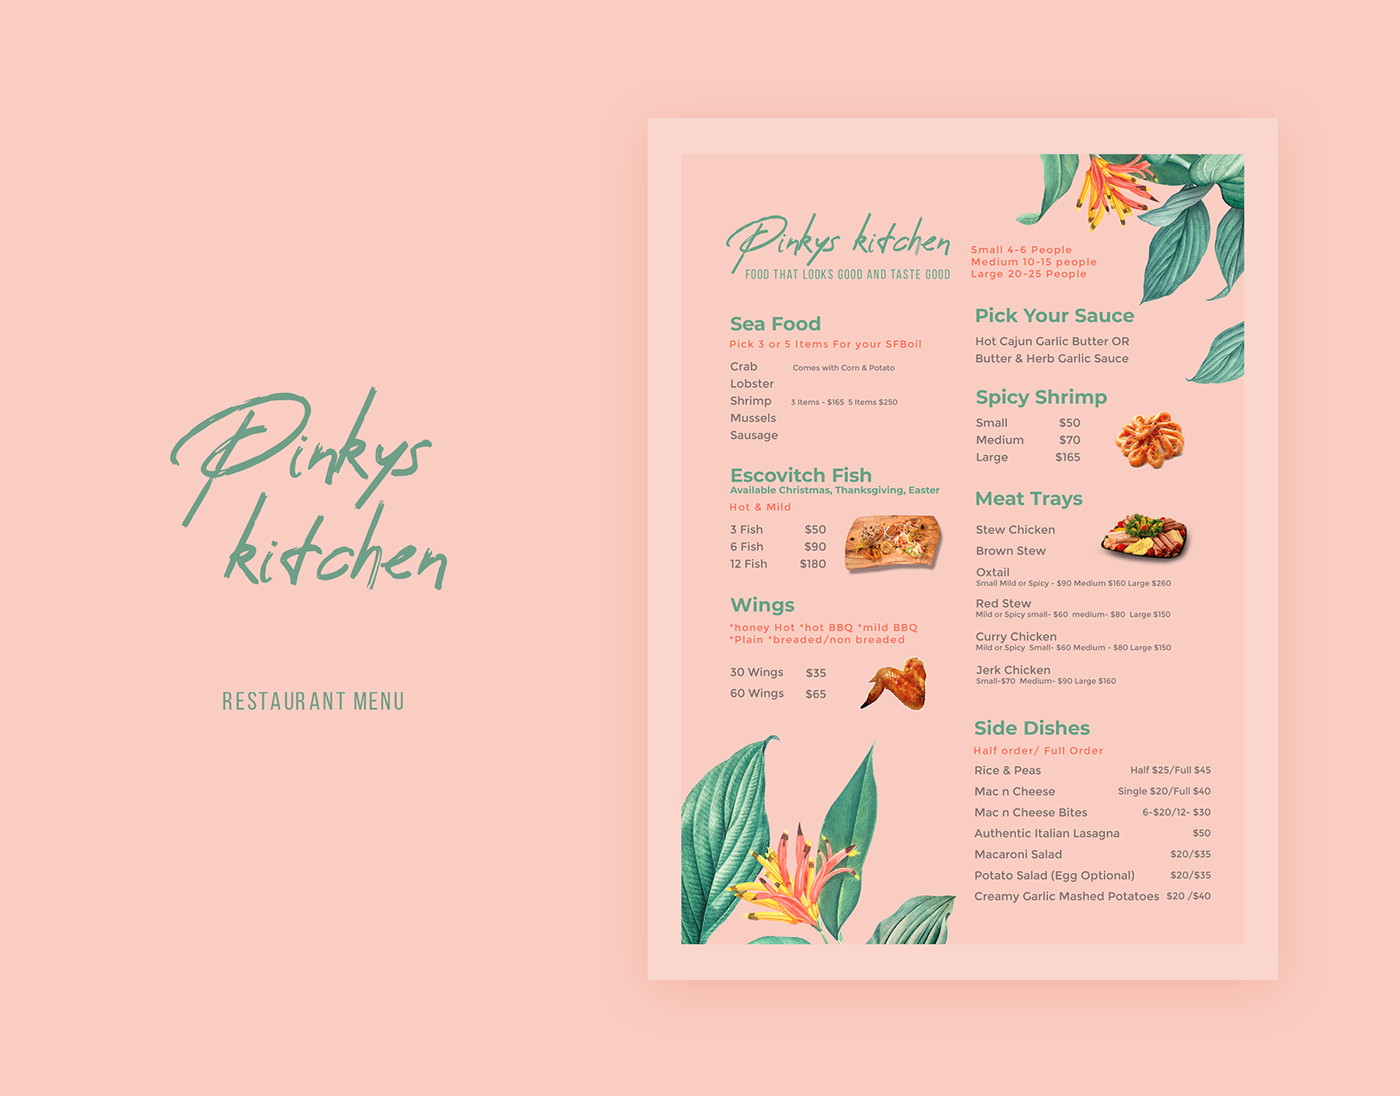 Abstract Art men design pink pink menu restaurant menu design trend 2021 trendy